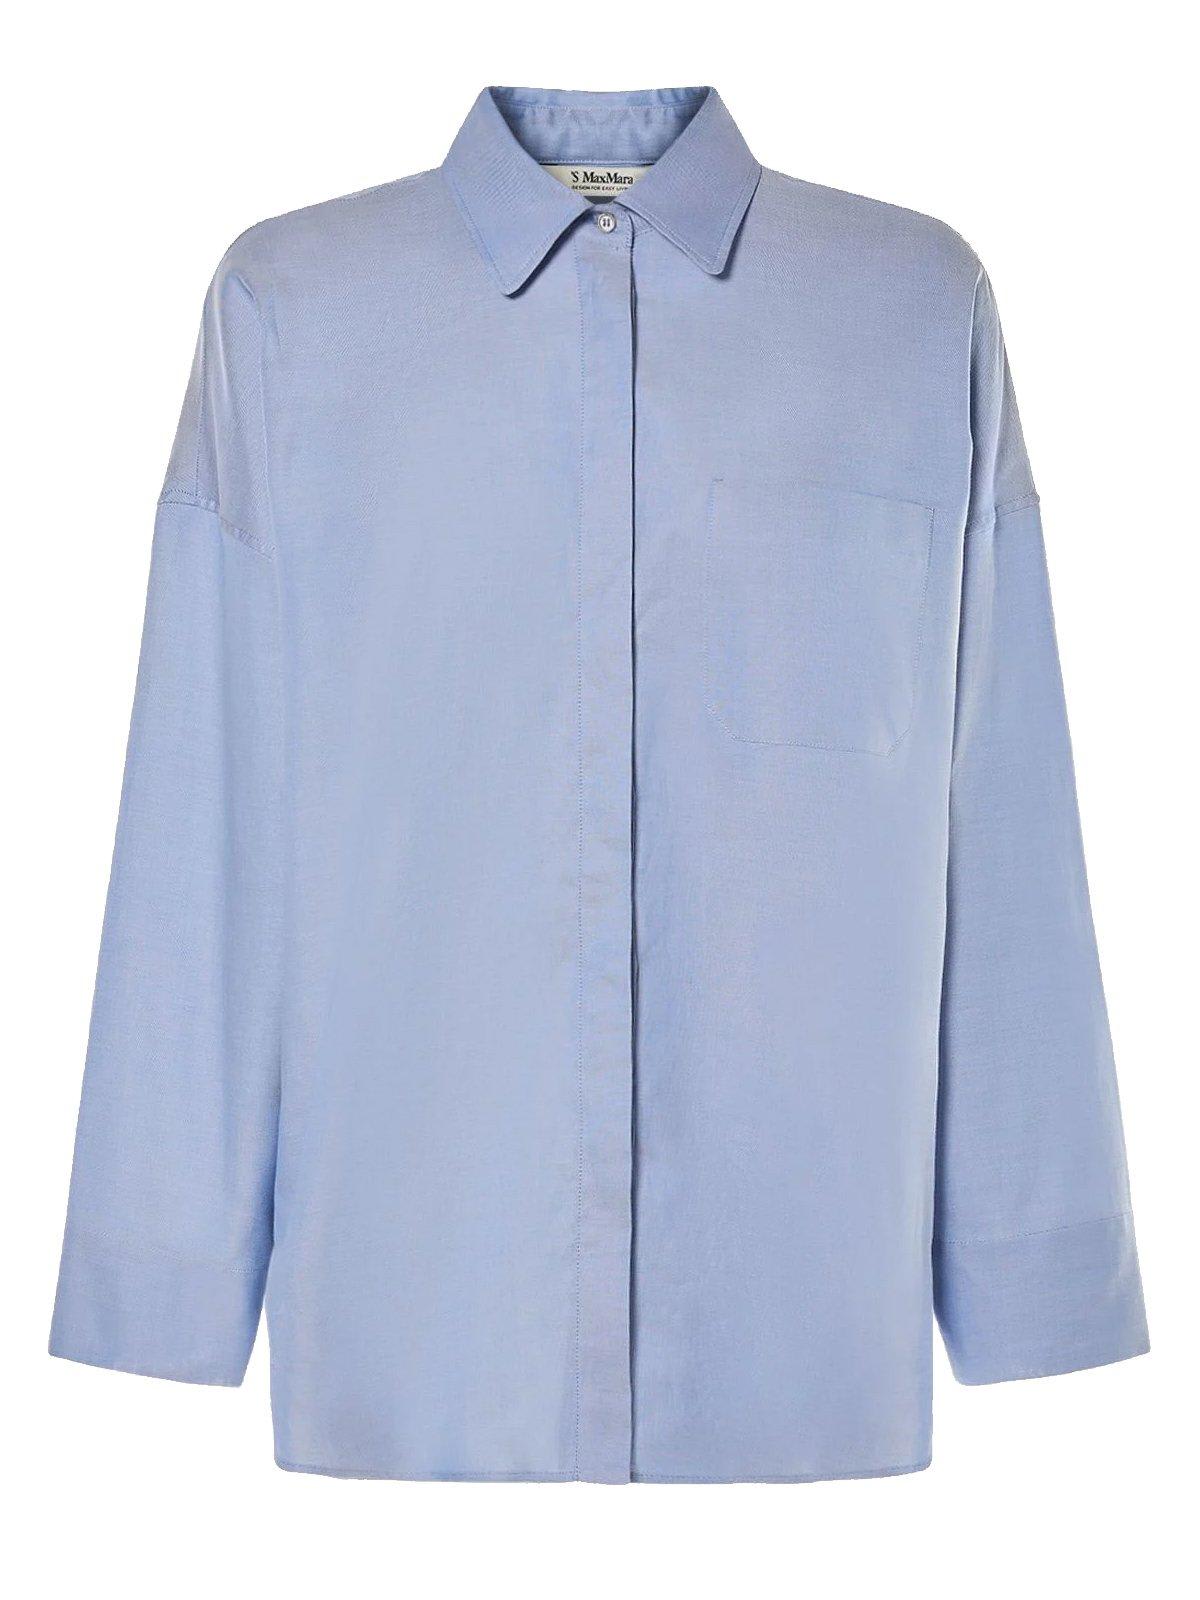 'S Max Mara Buttoned Long-sleeved Shirt